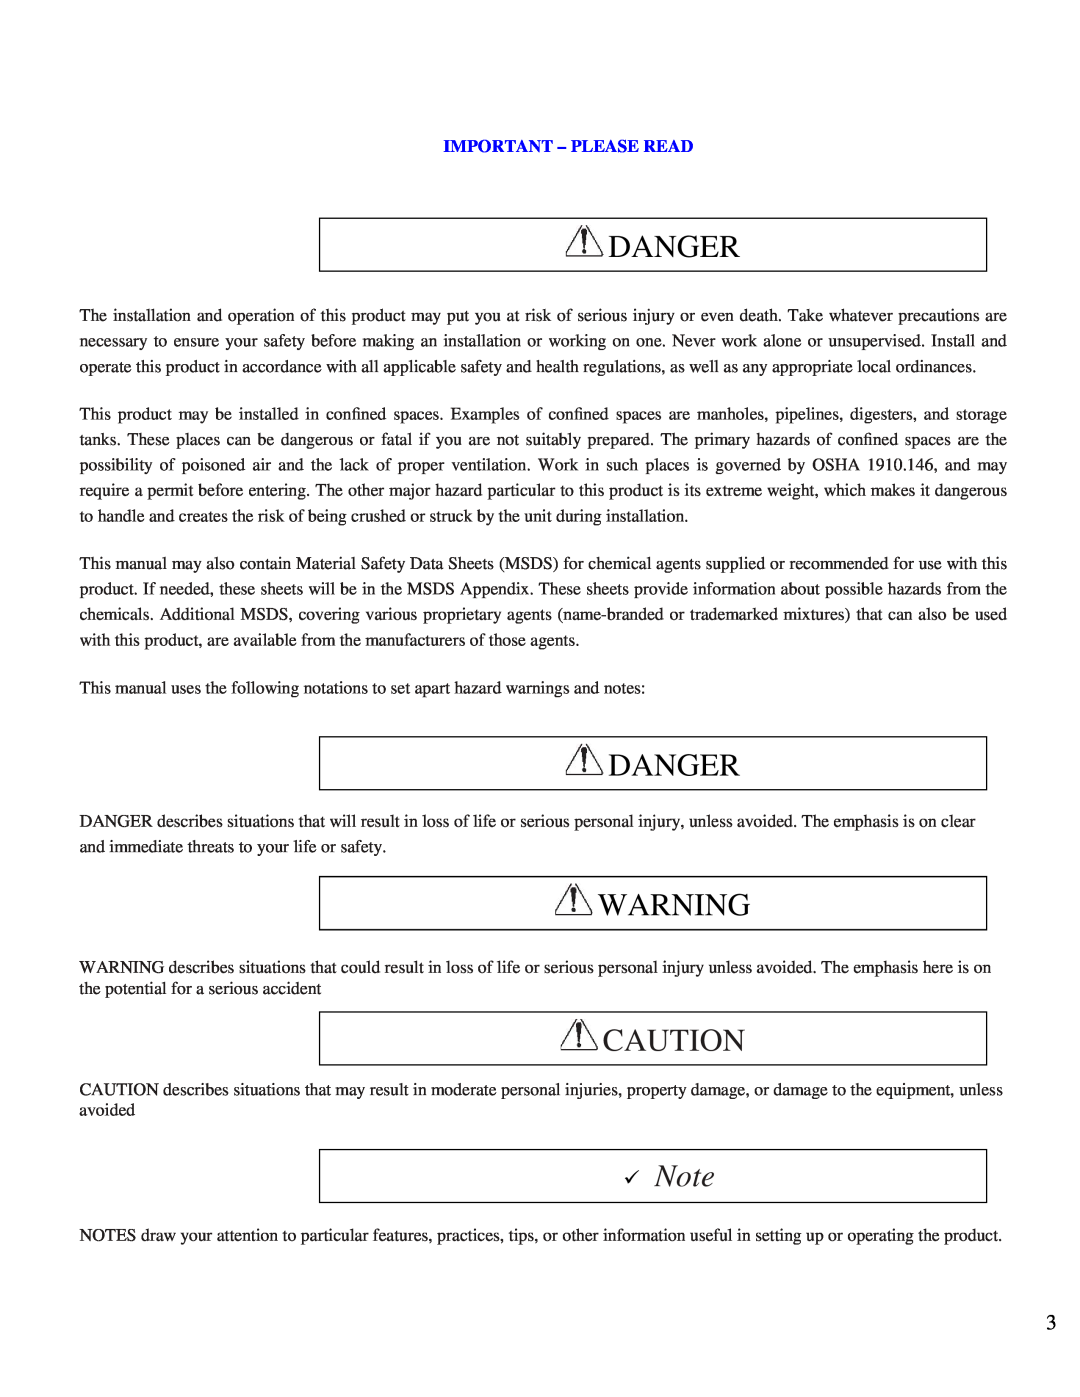 Arkon Channelmag instruction manual Danger, Important - Please Read 